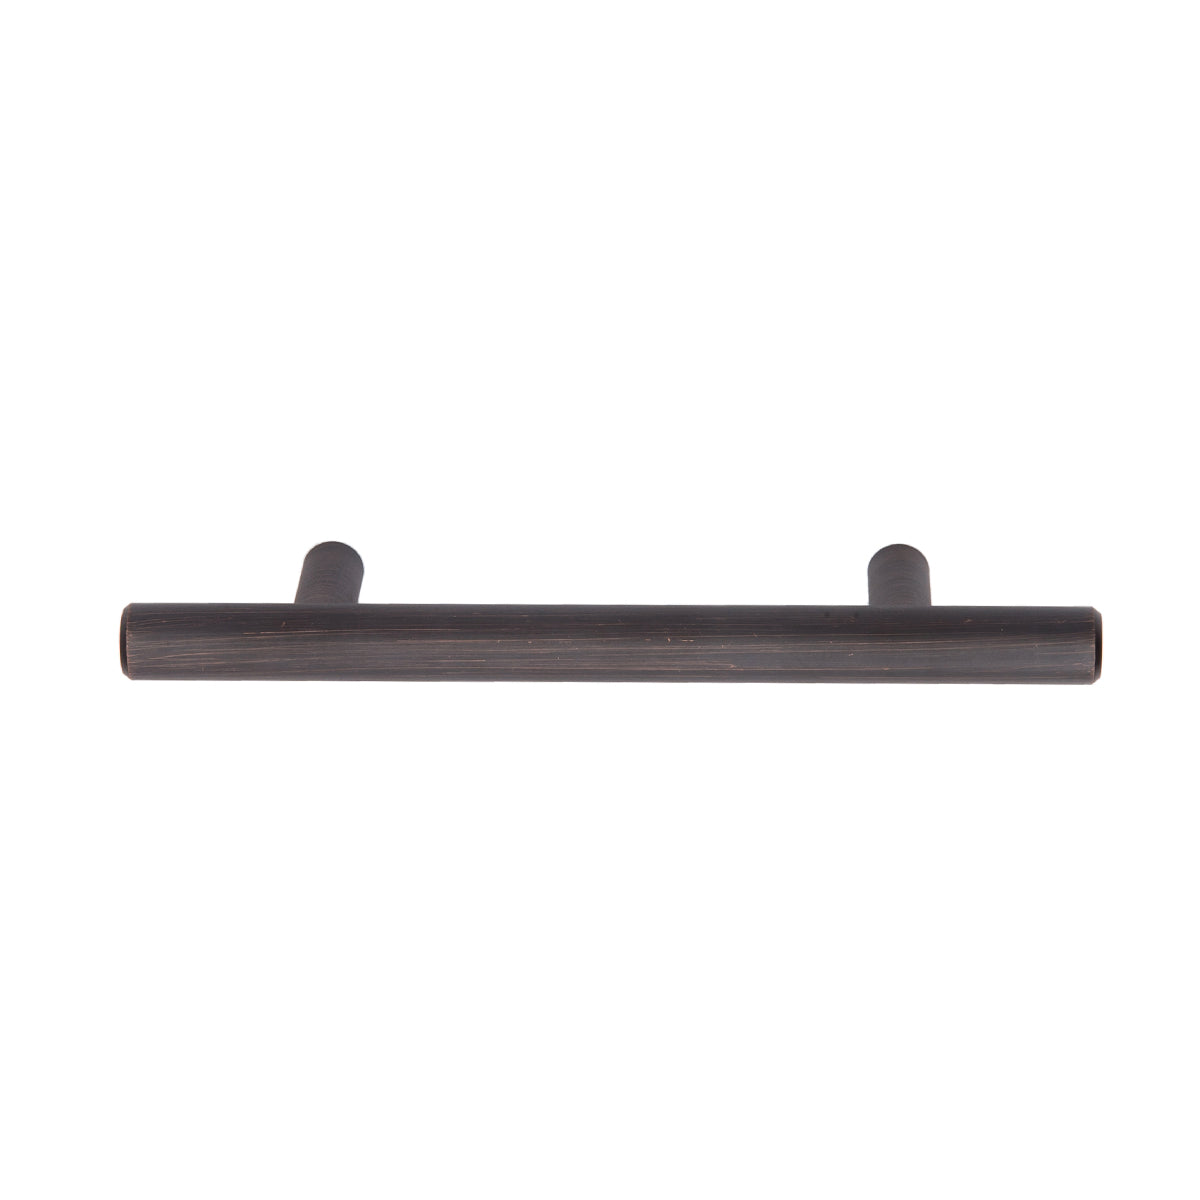 South Main Hardware Euro Bar Cabinet Handle (1/2" Diameter), 5.88" Length (3.5" Hole Center)